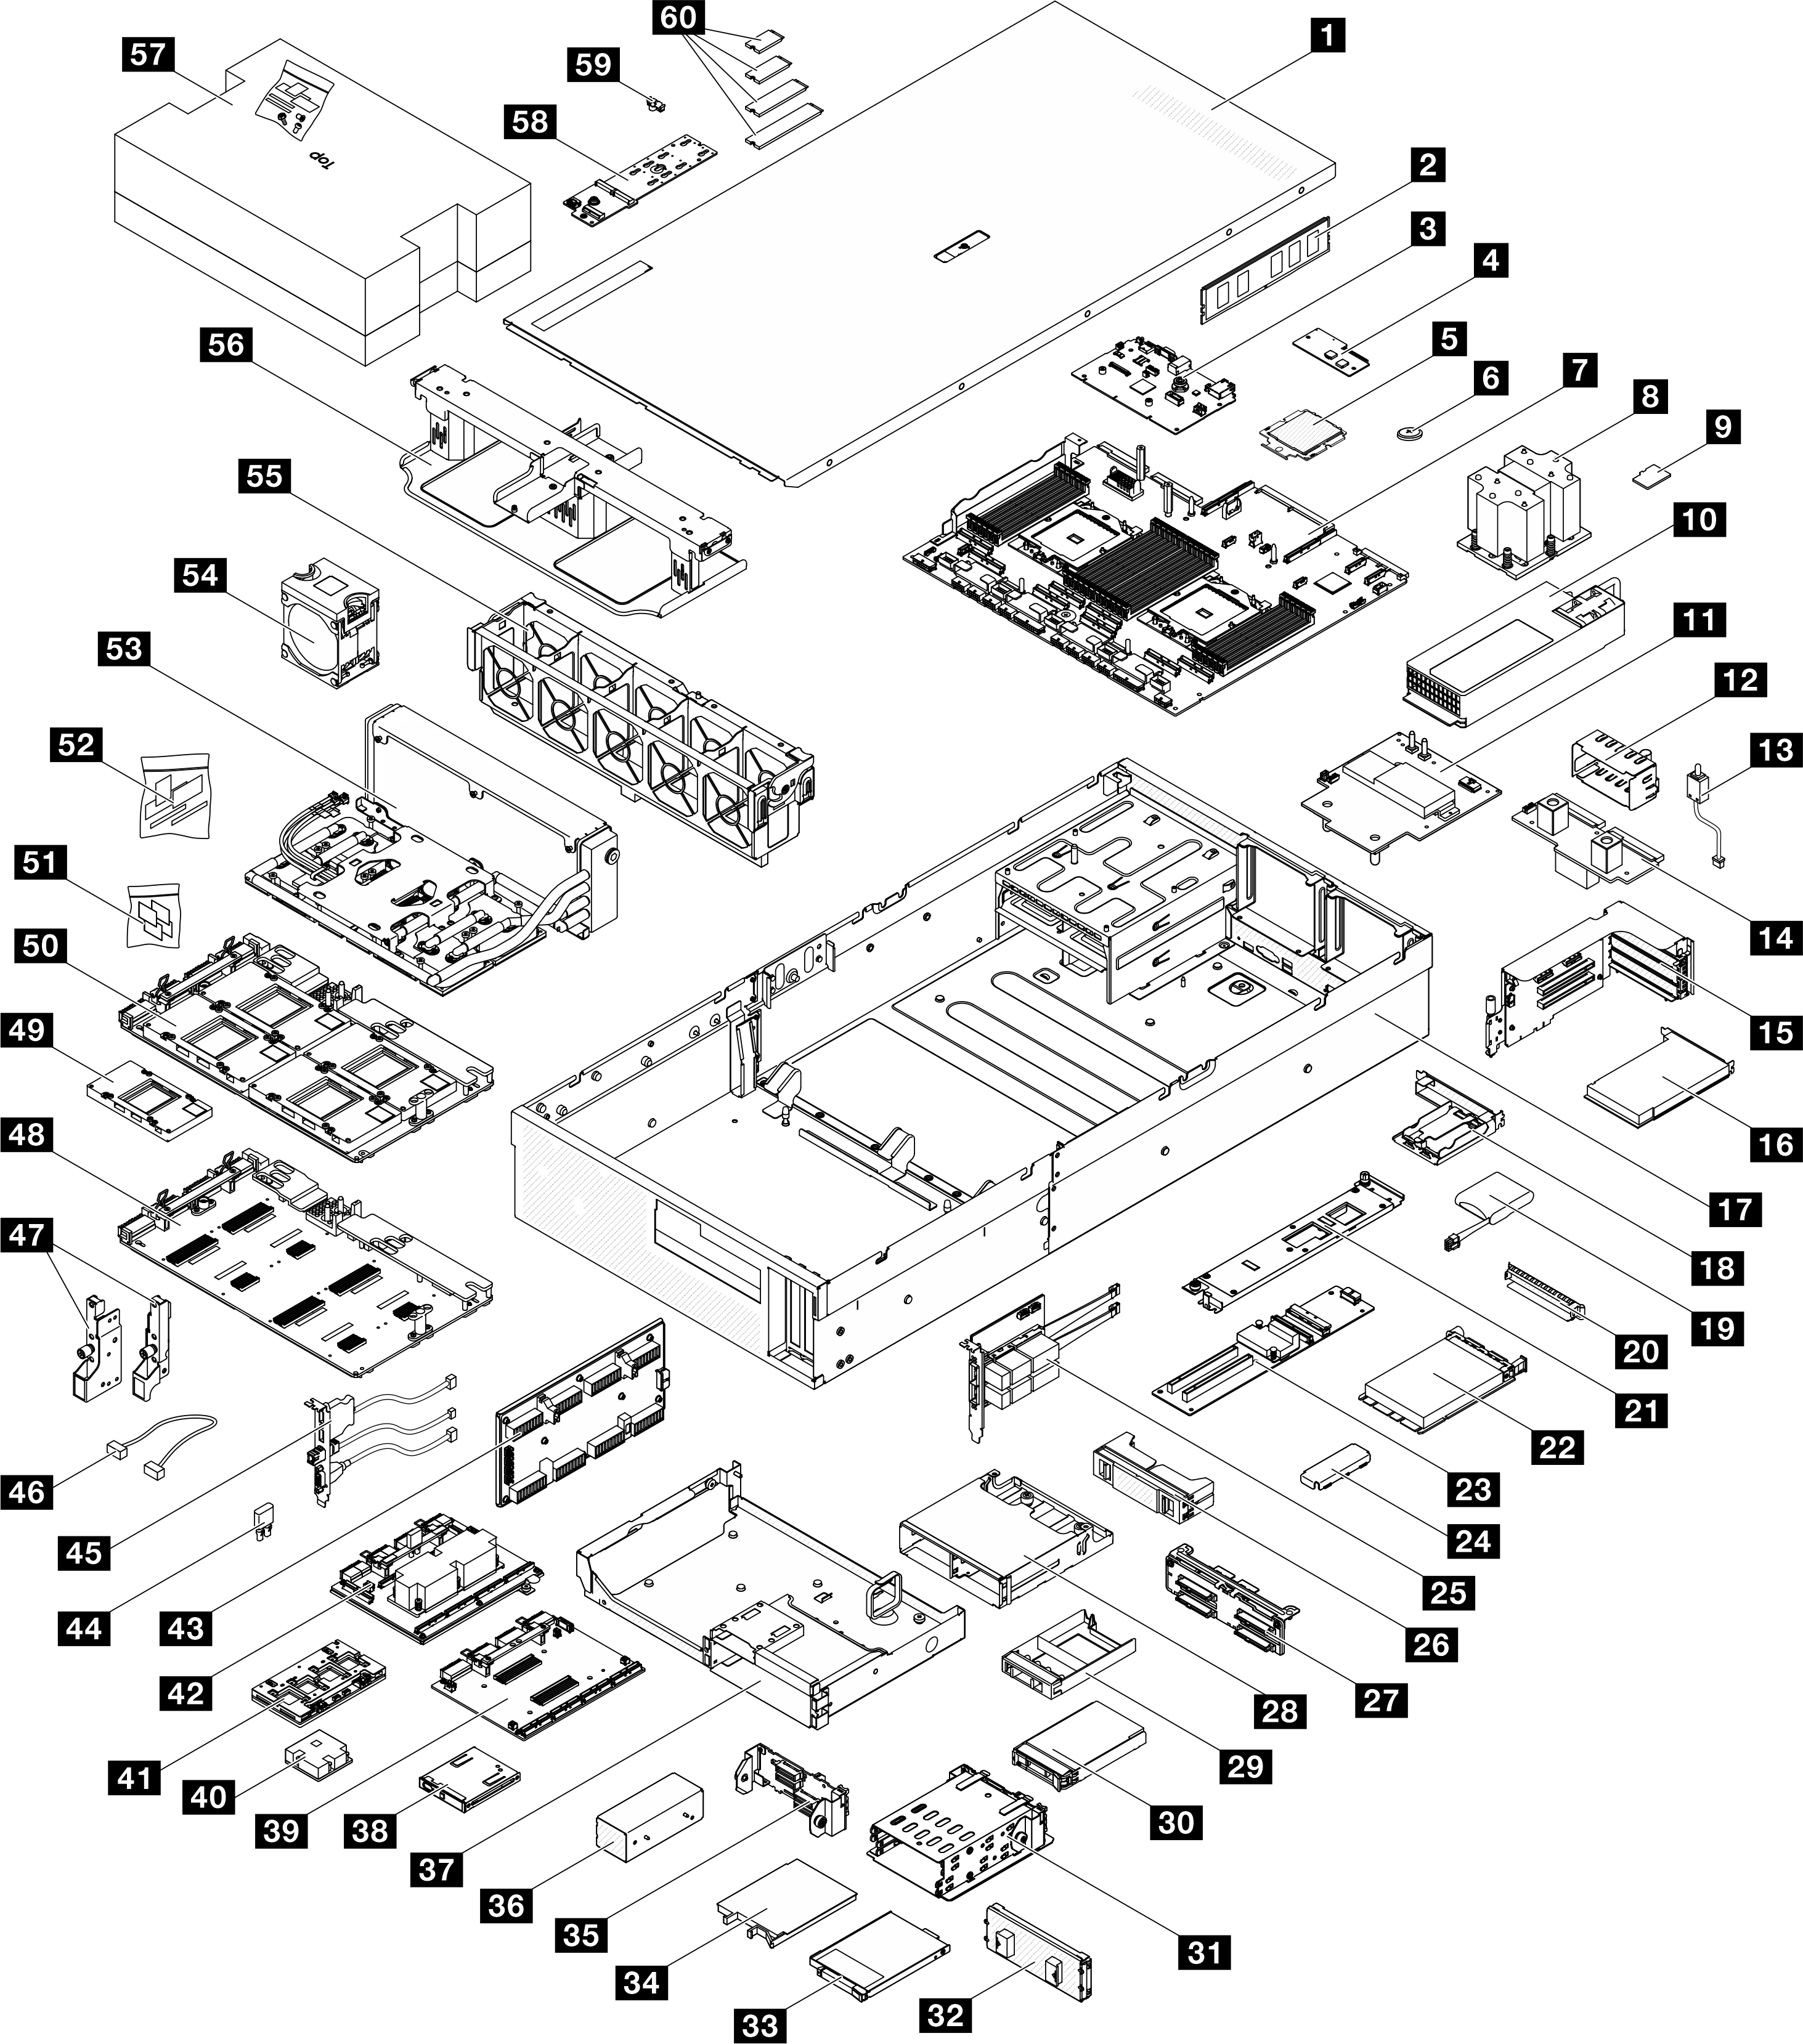 Server components of the SXM5 GPU 型号